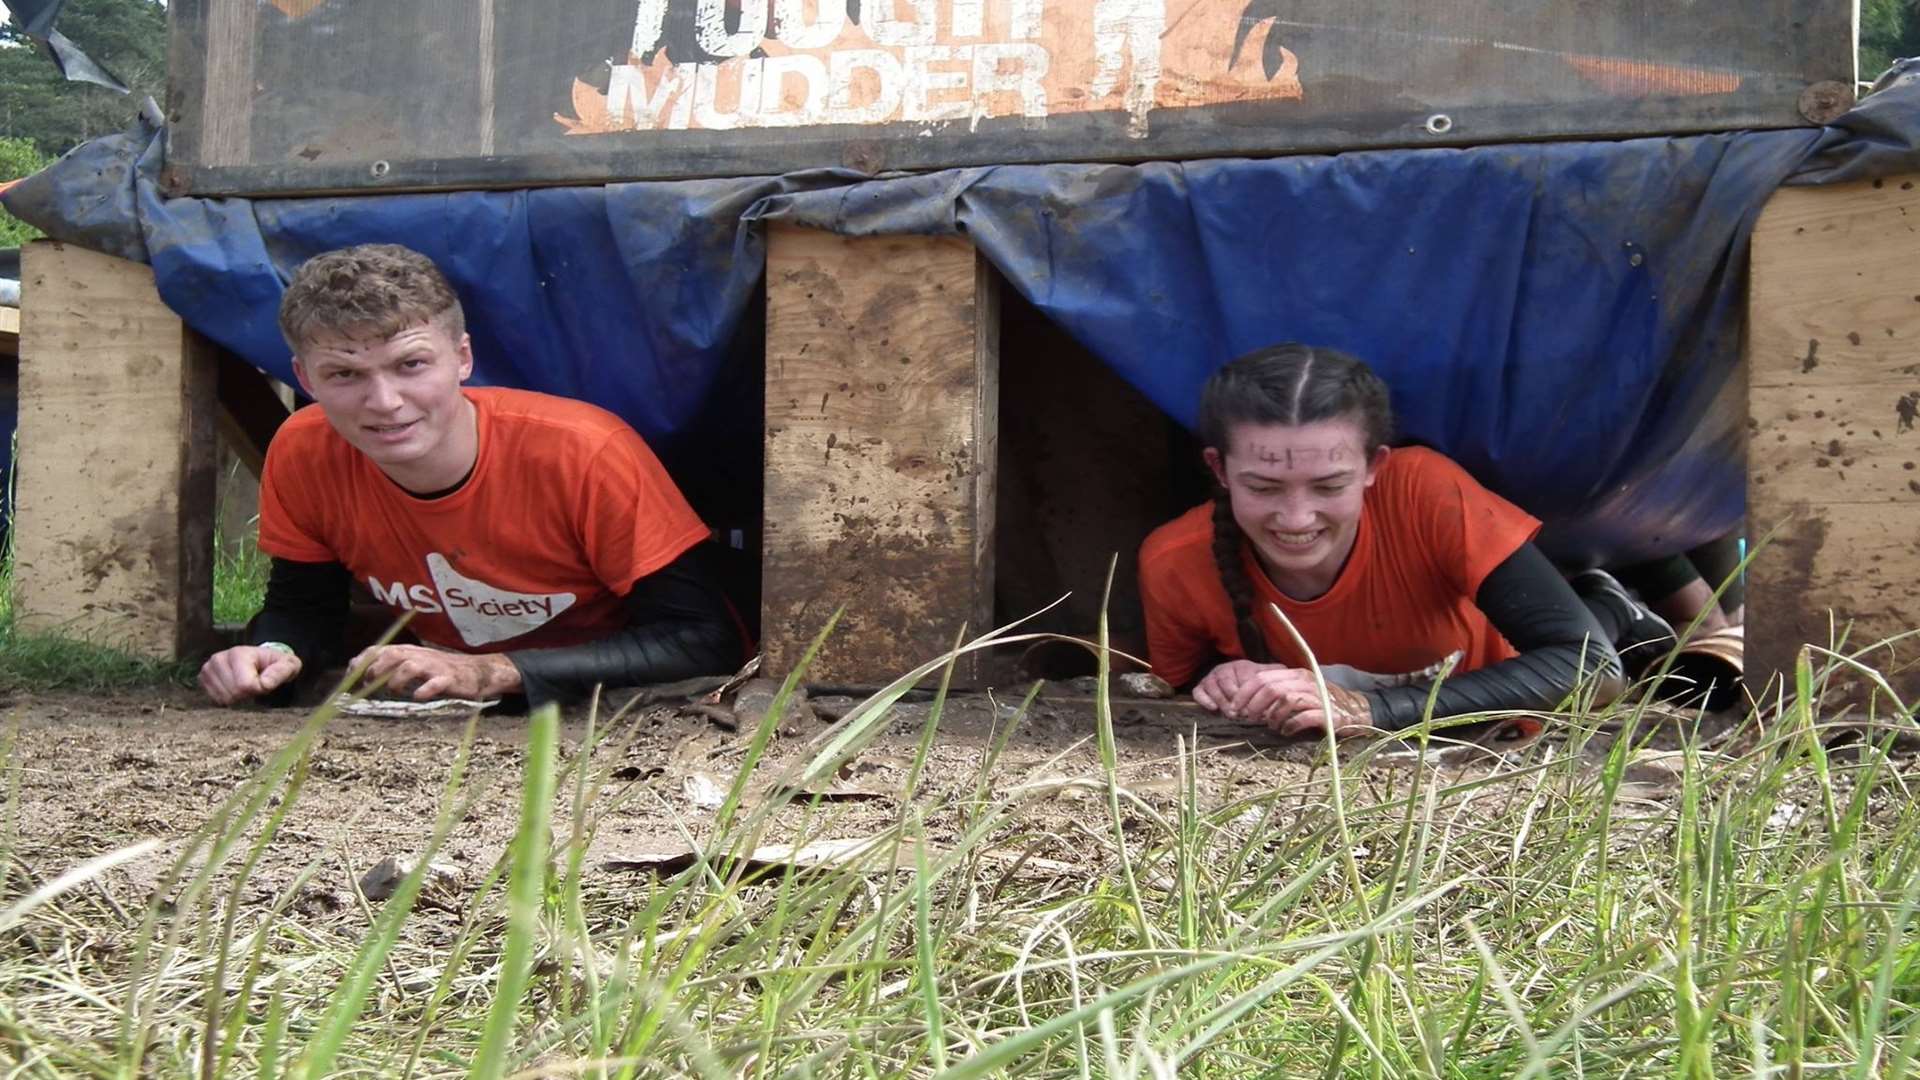 Luke Dawes, 19, and Jordan Dawes, 16, from Swanley, took part in a Tough Mudder challenge